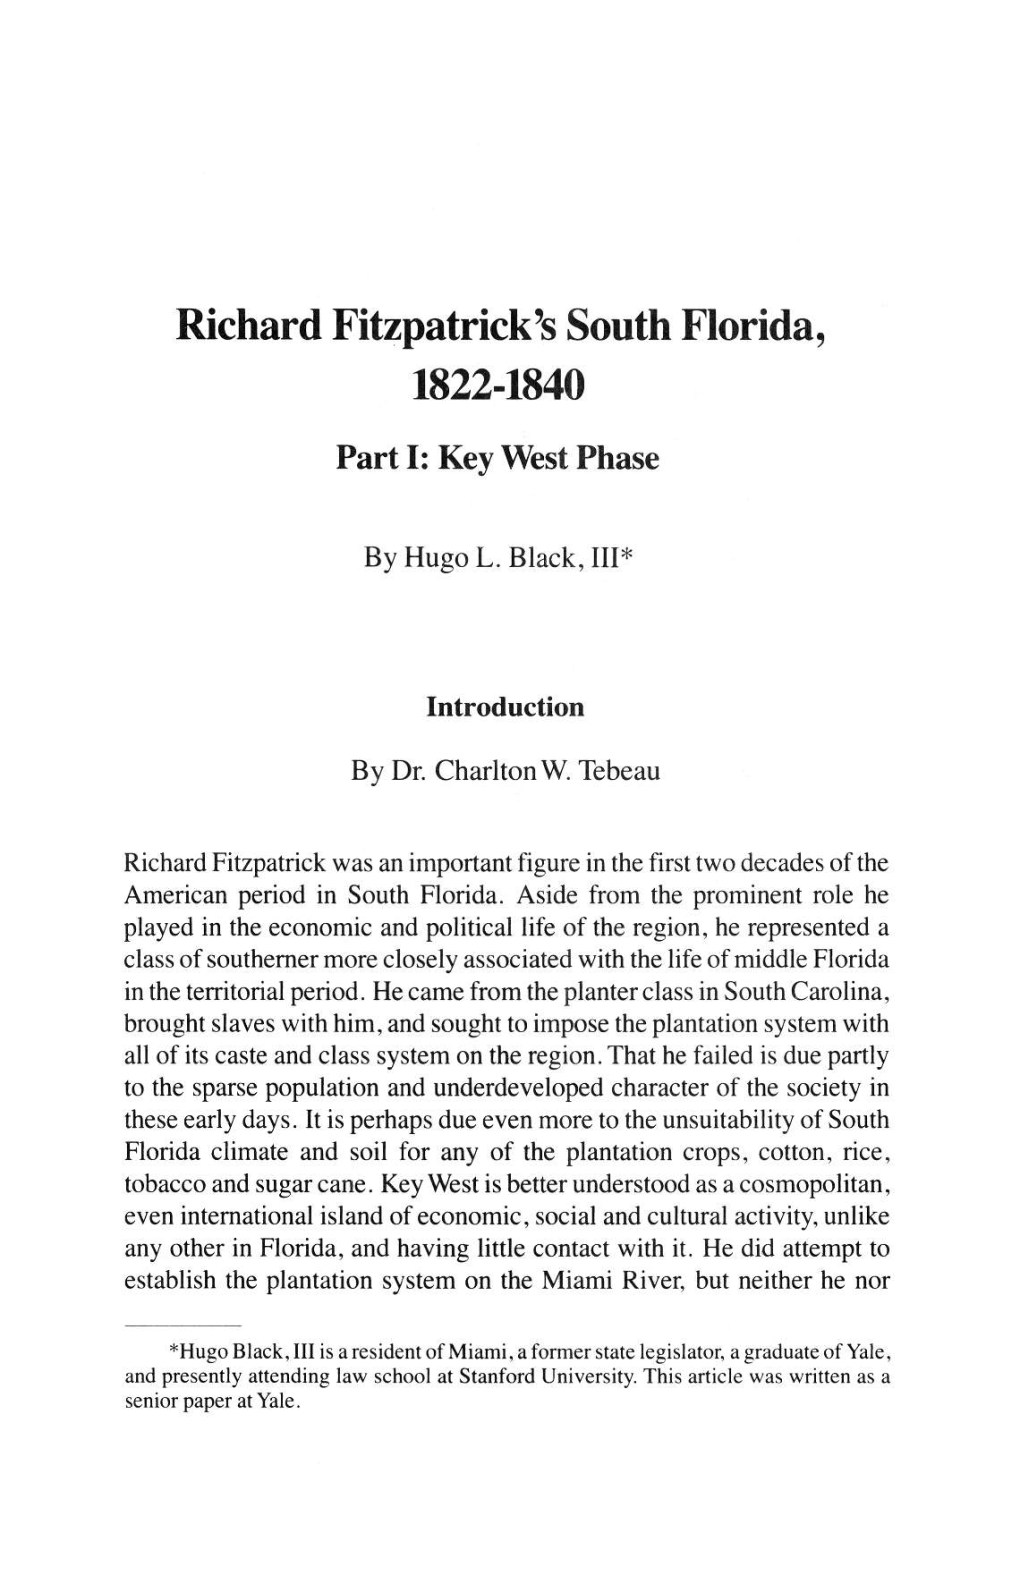 Richard Fitzpatrick's South Florida, 1822-1840, Part I, Key West Phase